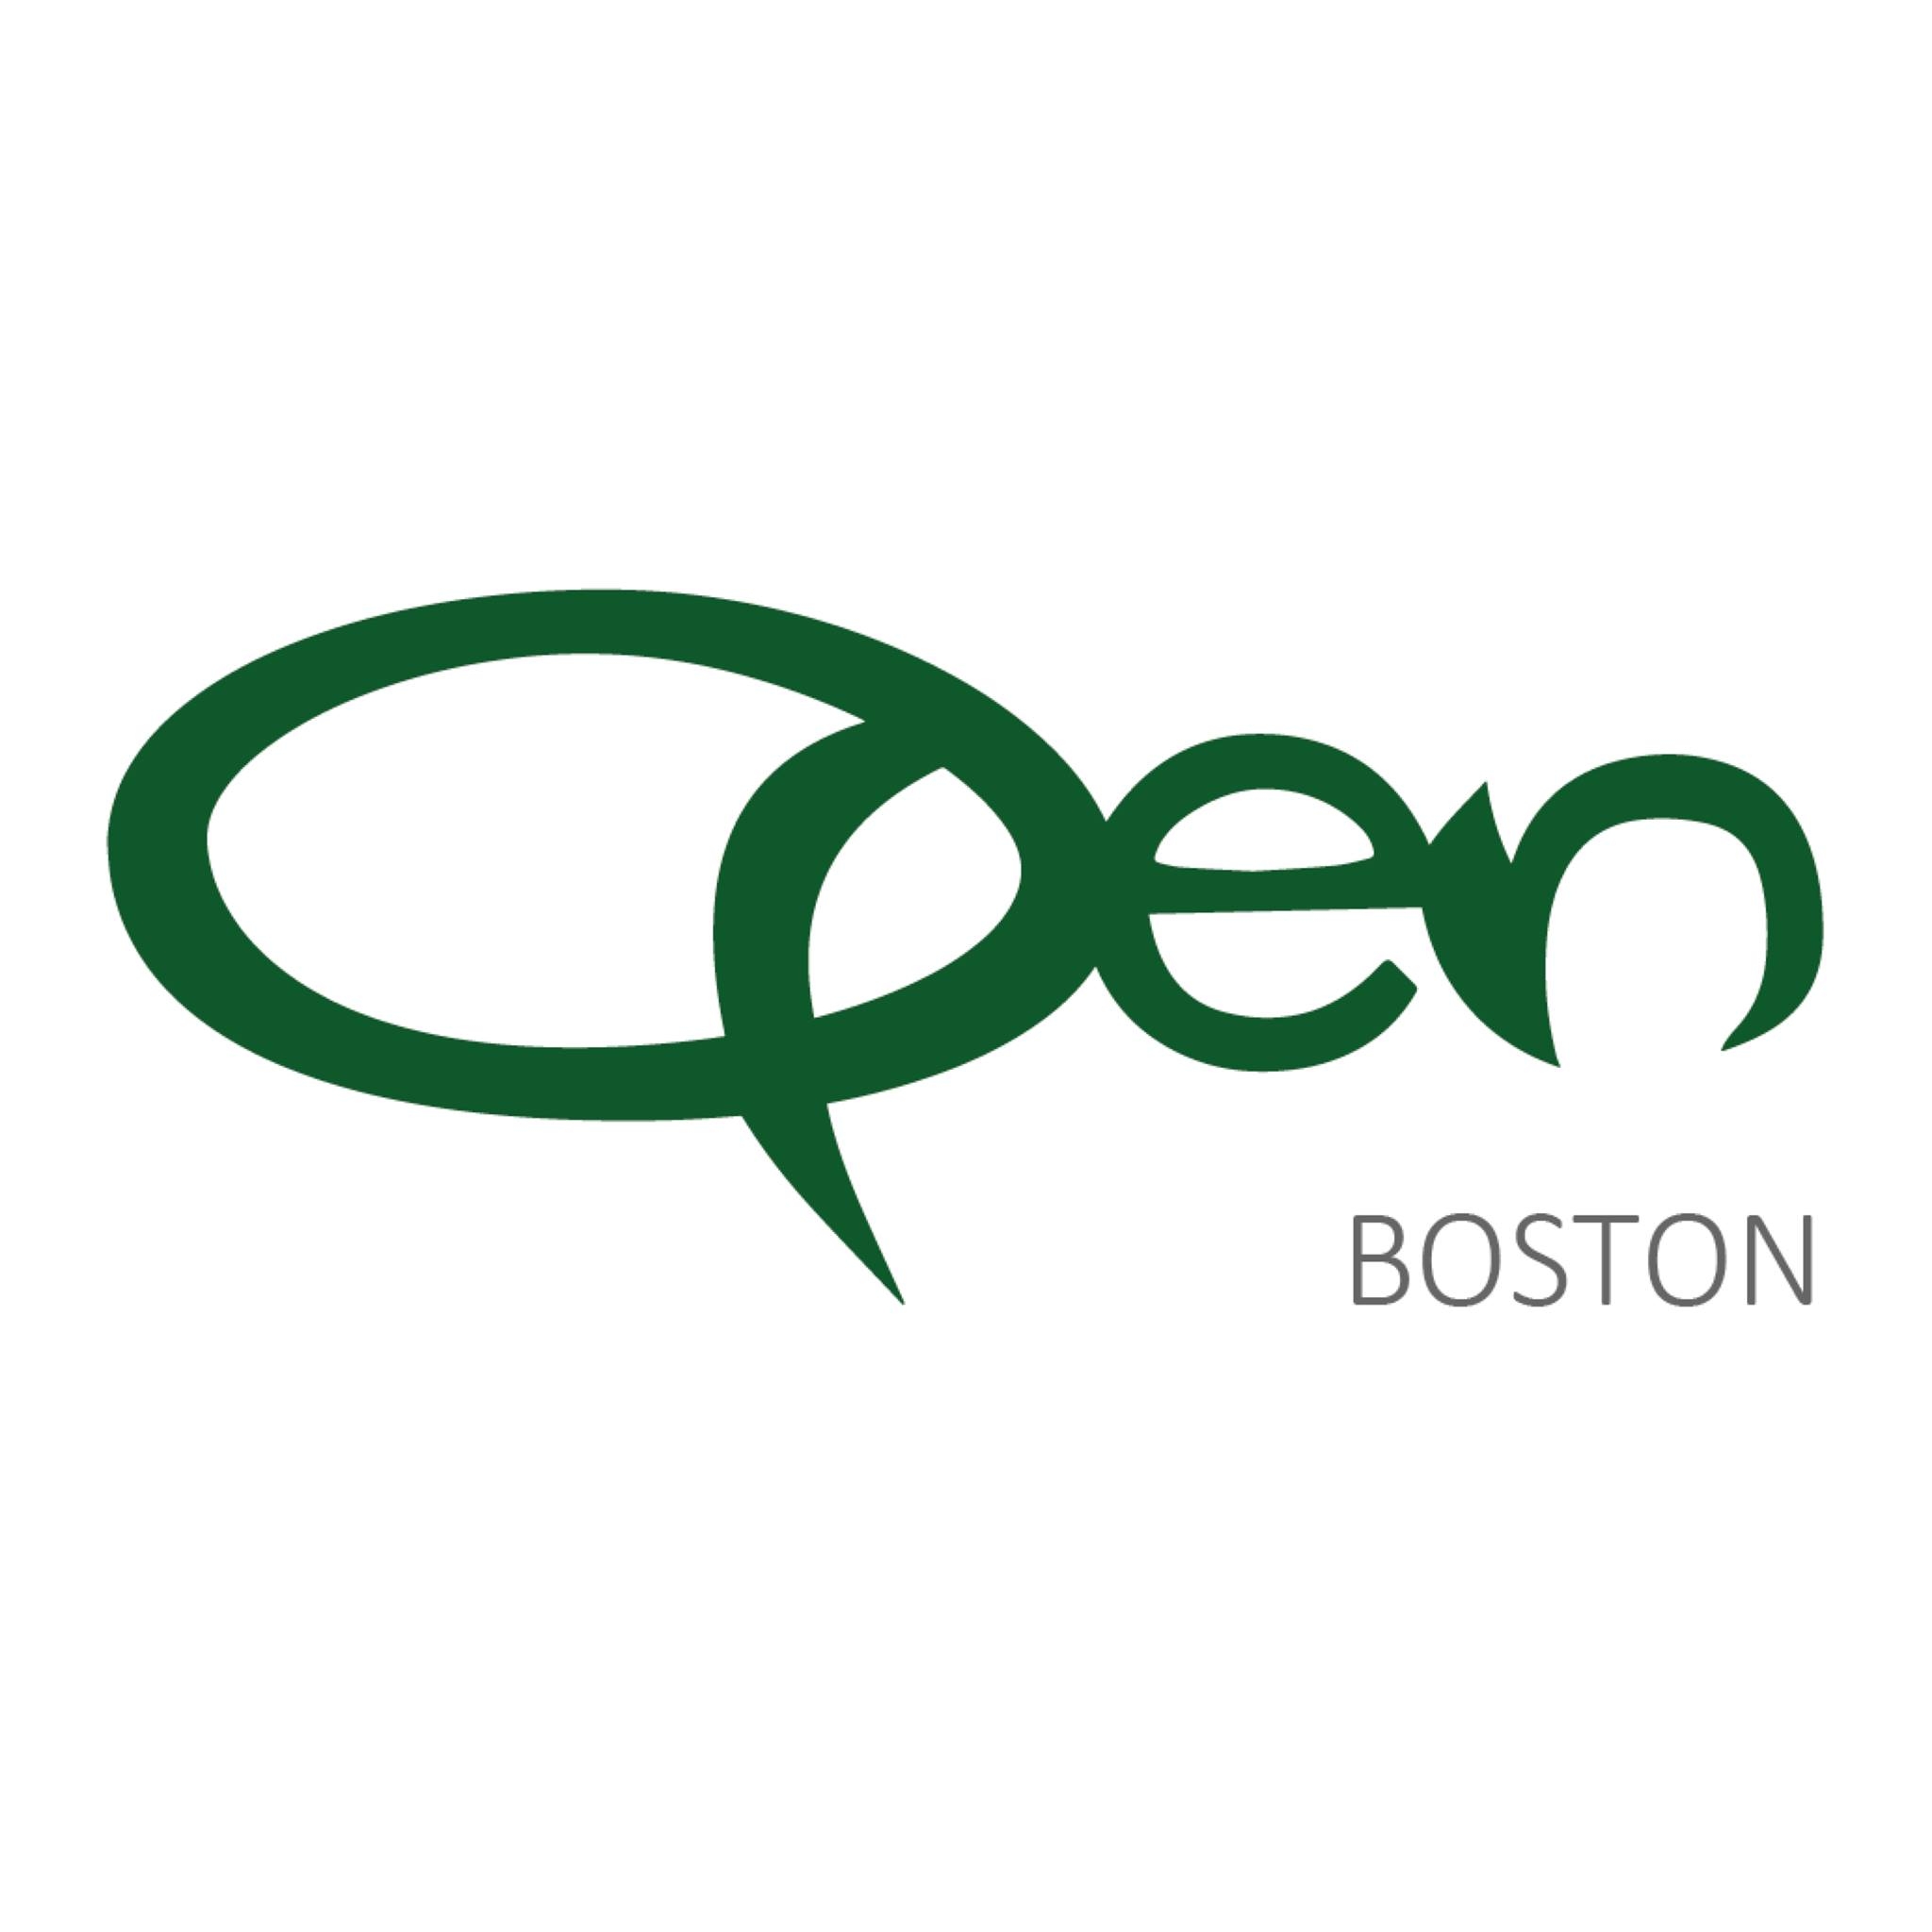 Pakistani Organizations Near Me - Organization of Pakistani Entrepreneurs Boston